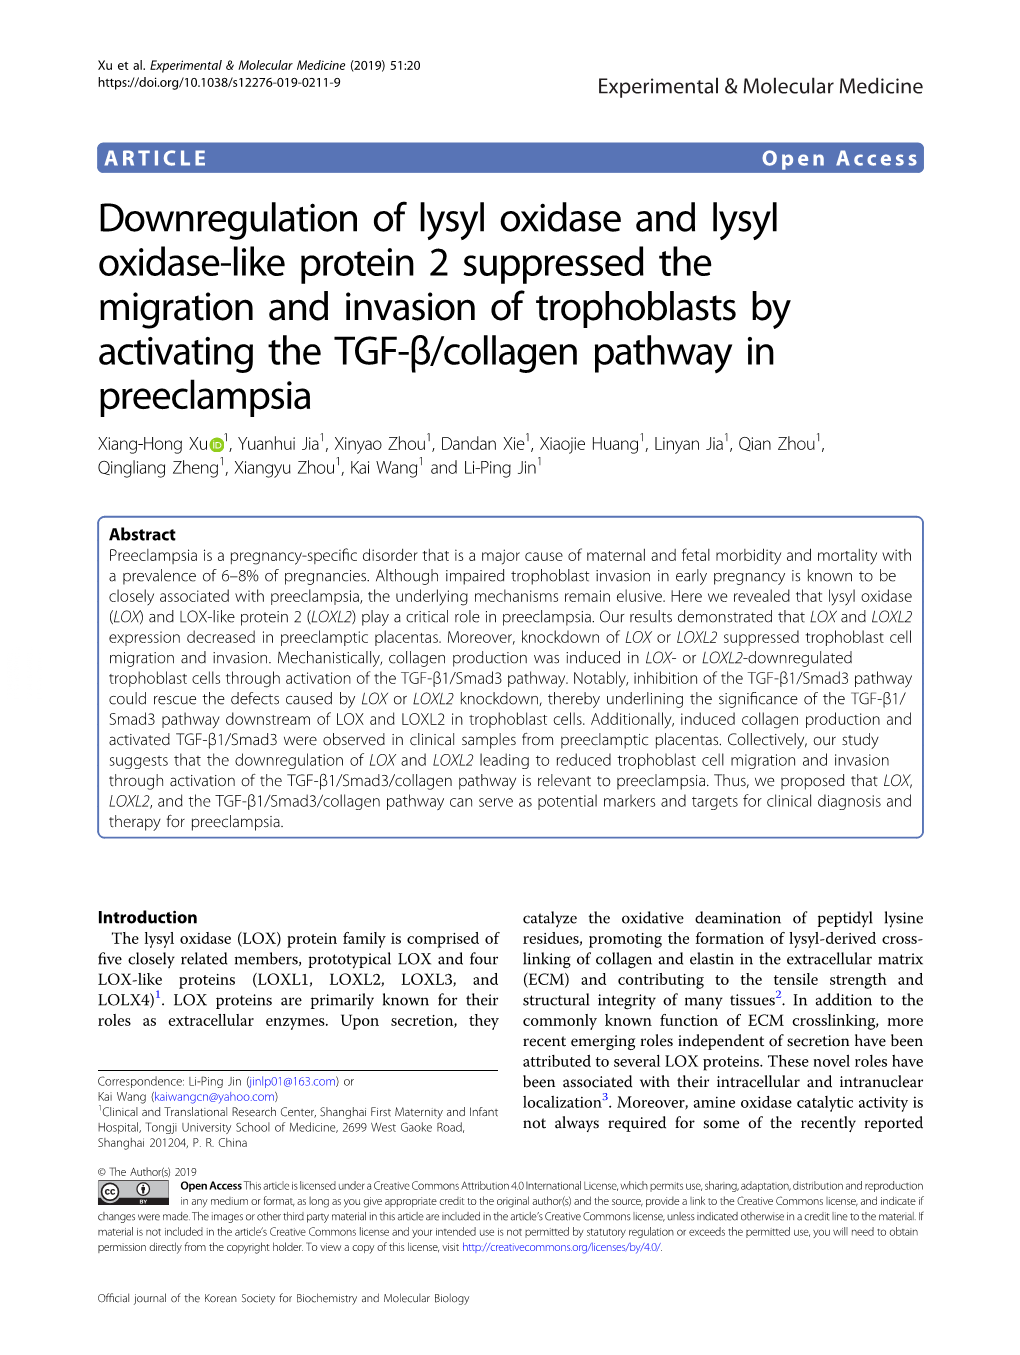 Downregulation of Lysyl Oxidase and Lysyl Oxidase-Like Protein 2